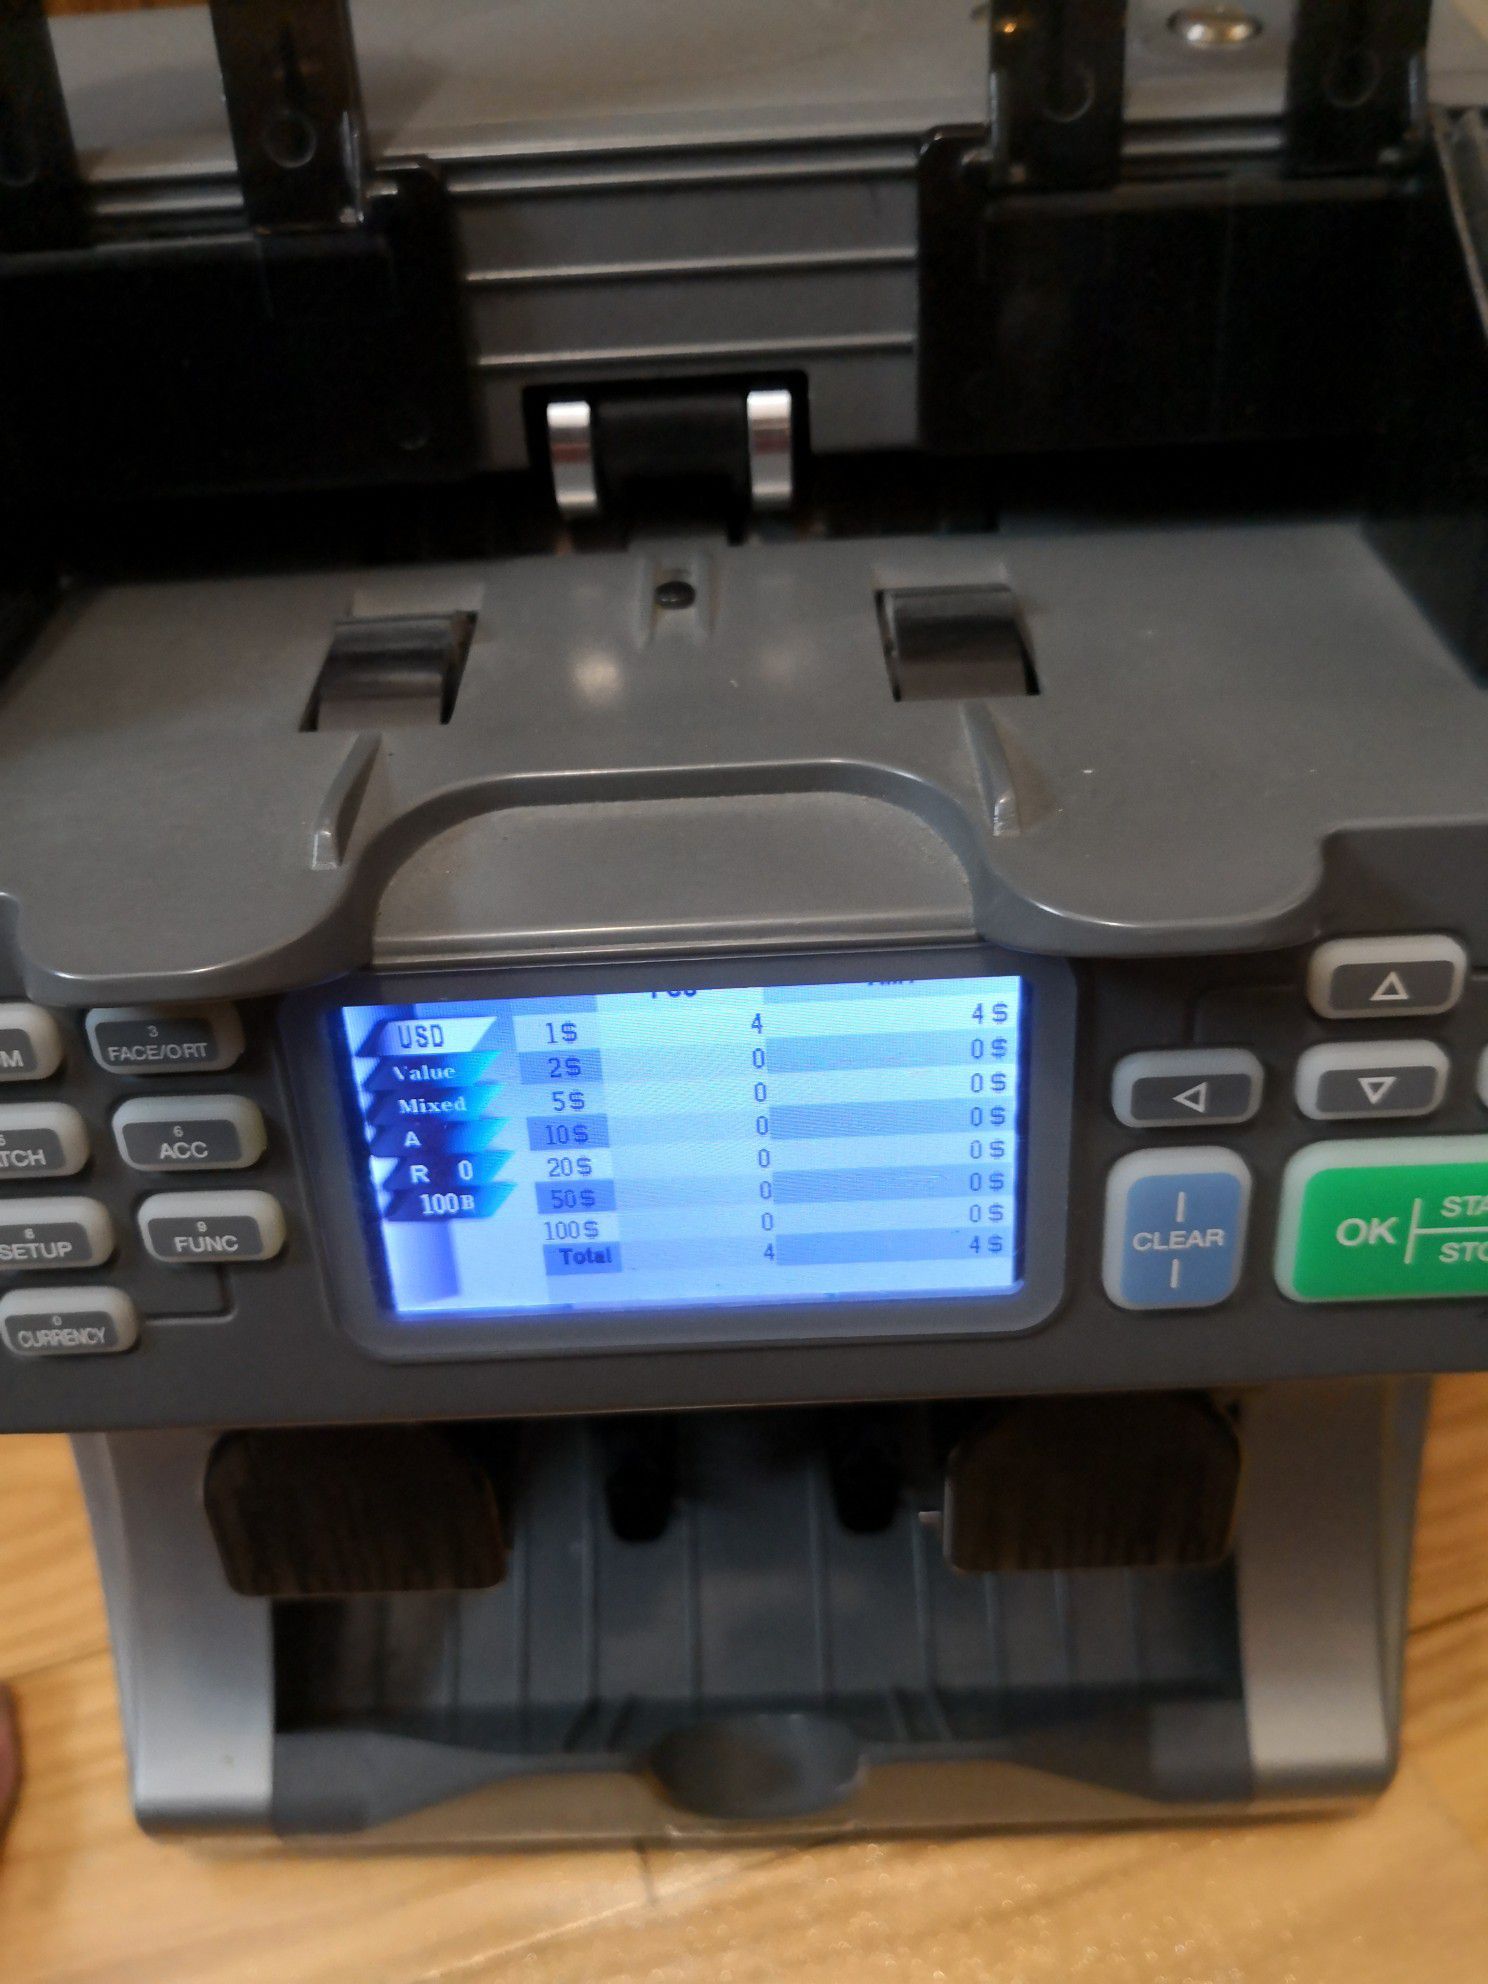 N-gene commercial grade cash counter